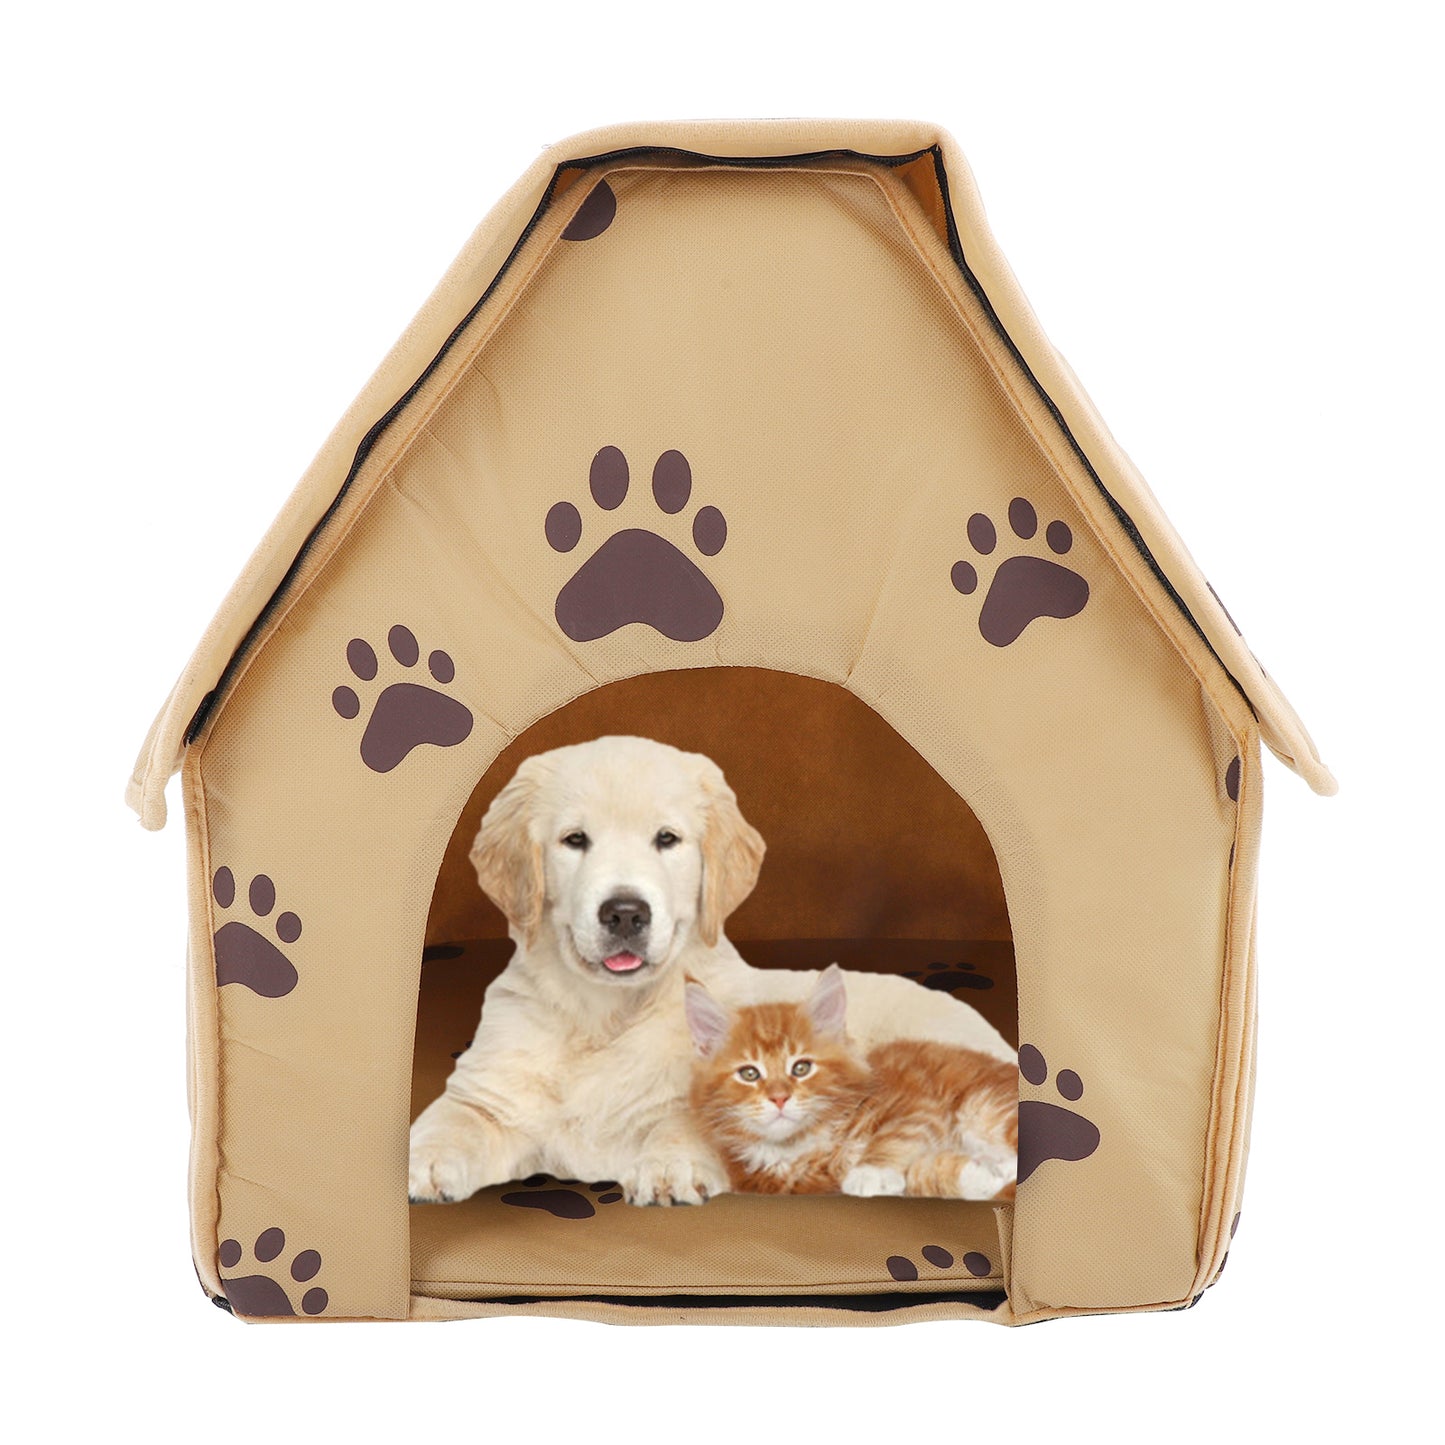 Tebru Pet House, Large Foldable Dog Bedcat House, Good Heat Preservation High Quality for Cat Dog